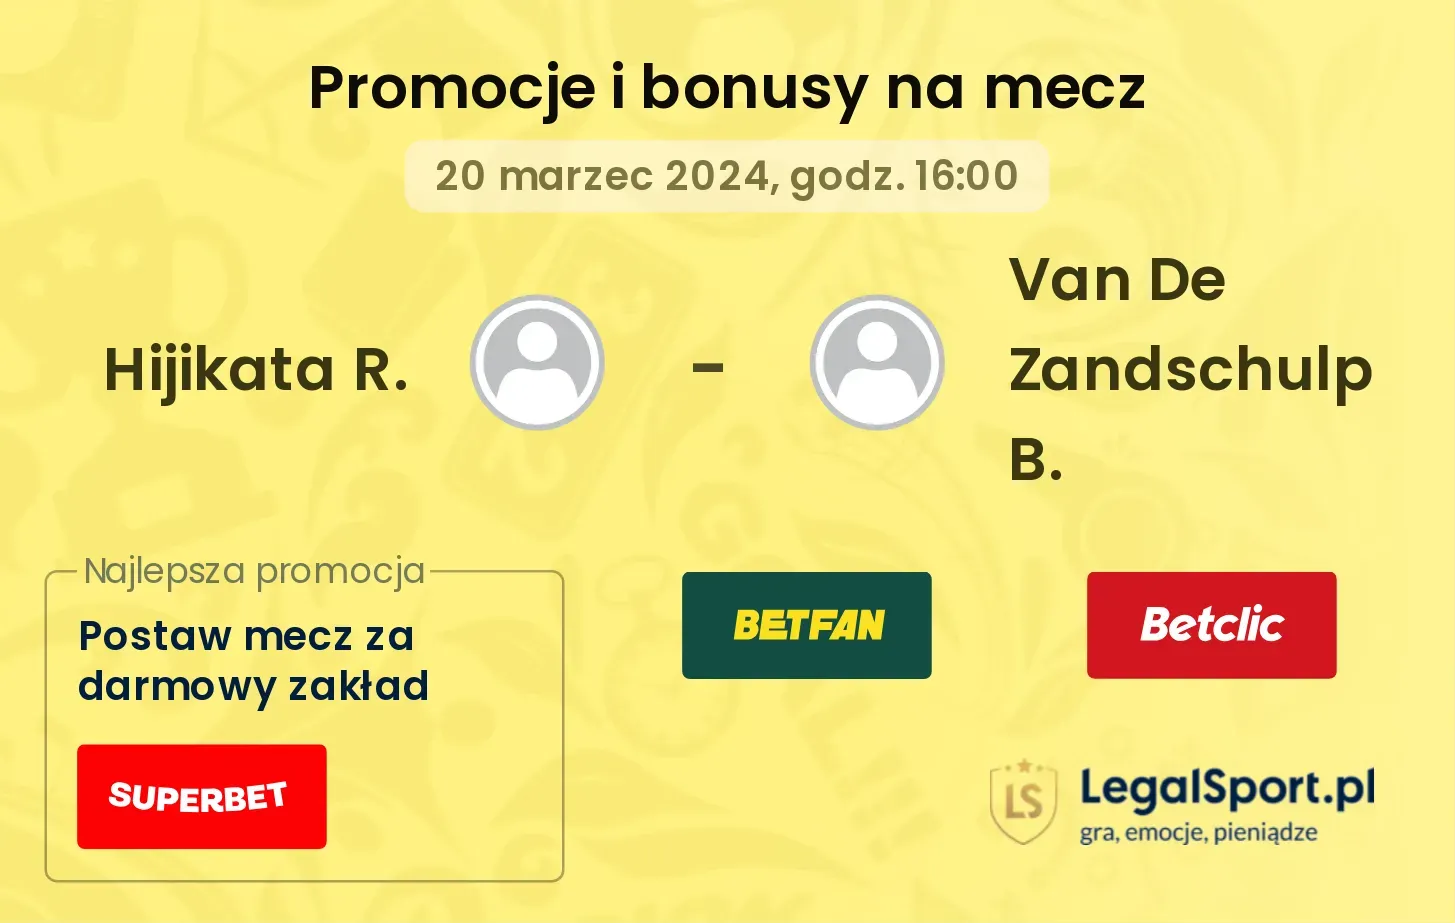 Hijikata R. - Van De Zandschulp B. promocje bonusy na mecz